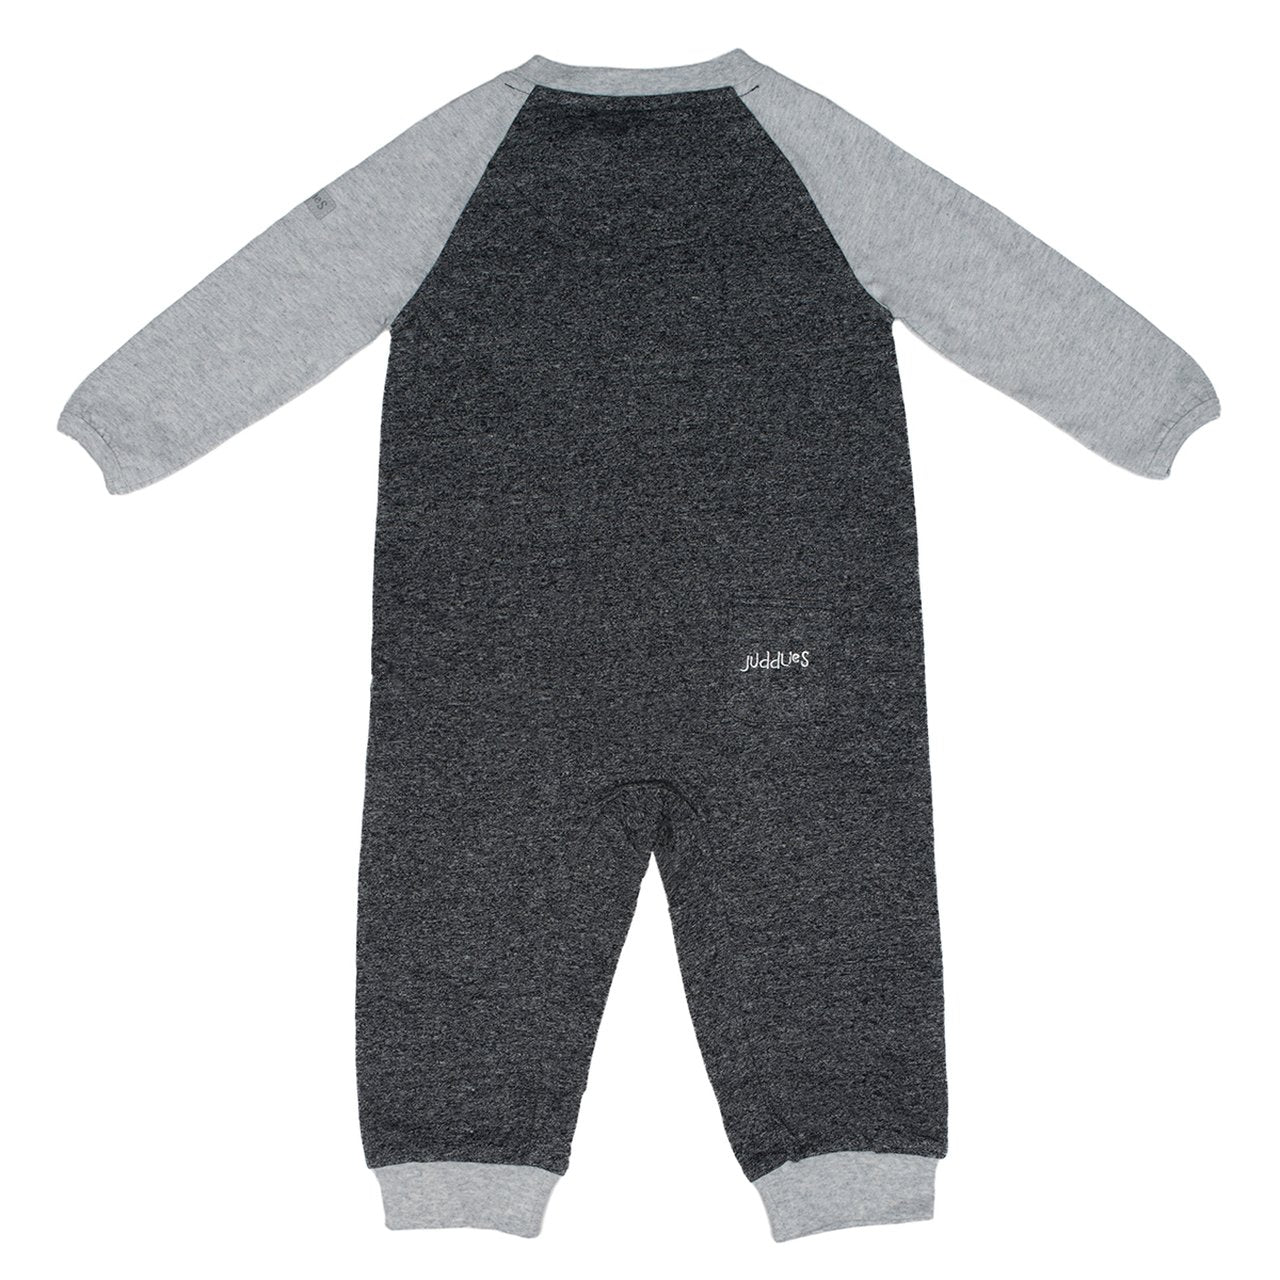 Juddlies - Organic Baby Playsuit Sleepsuit with Double Zip - Raglan Collection - Graphite Black/Grey - Stylemykid.com